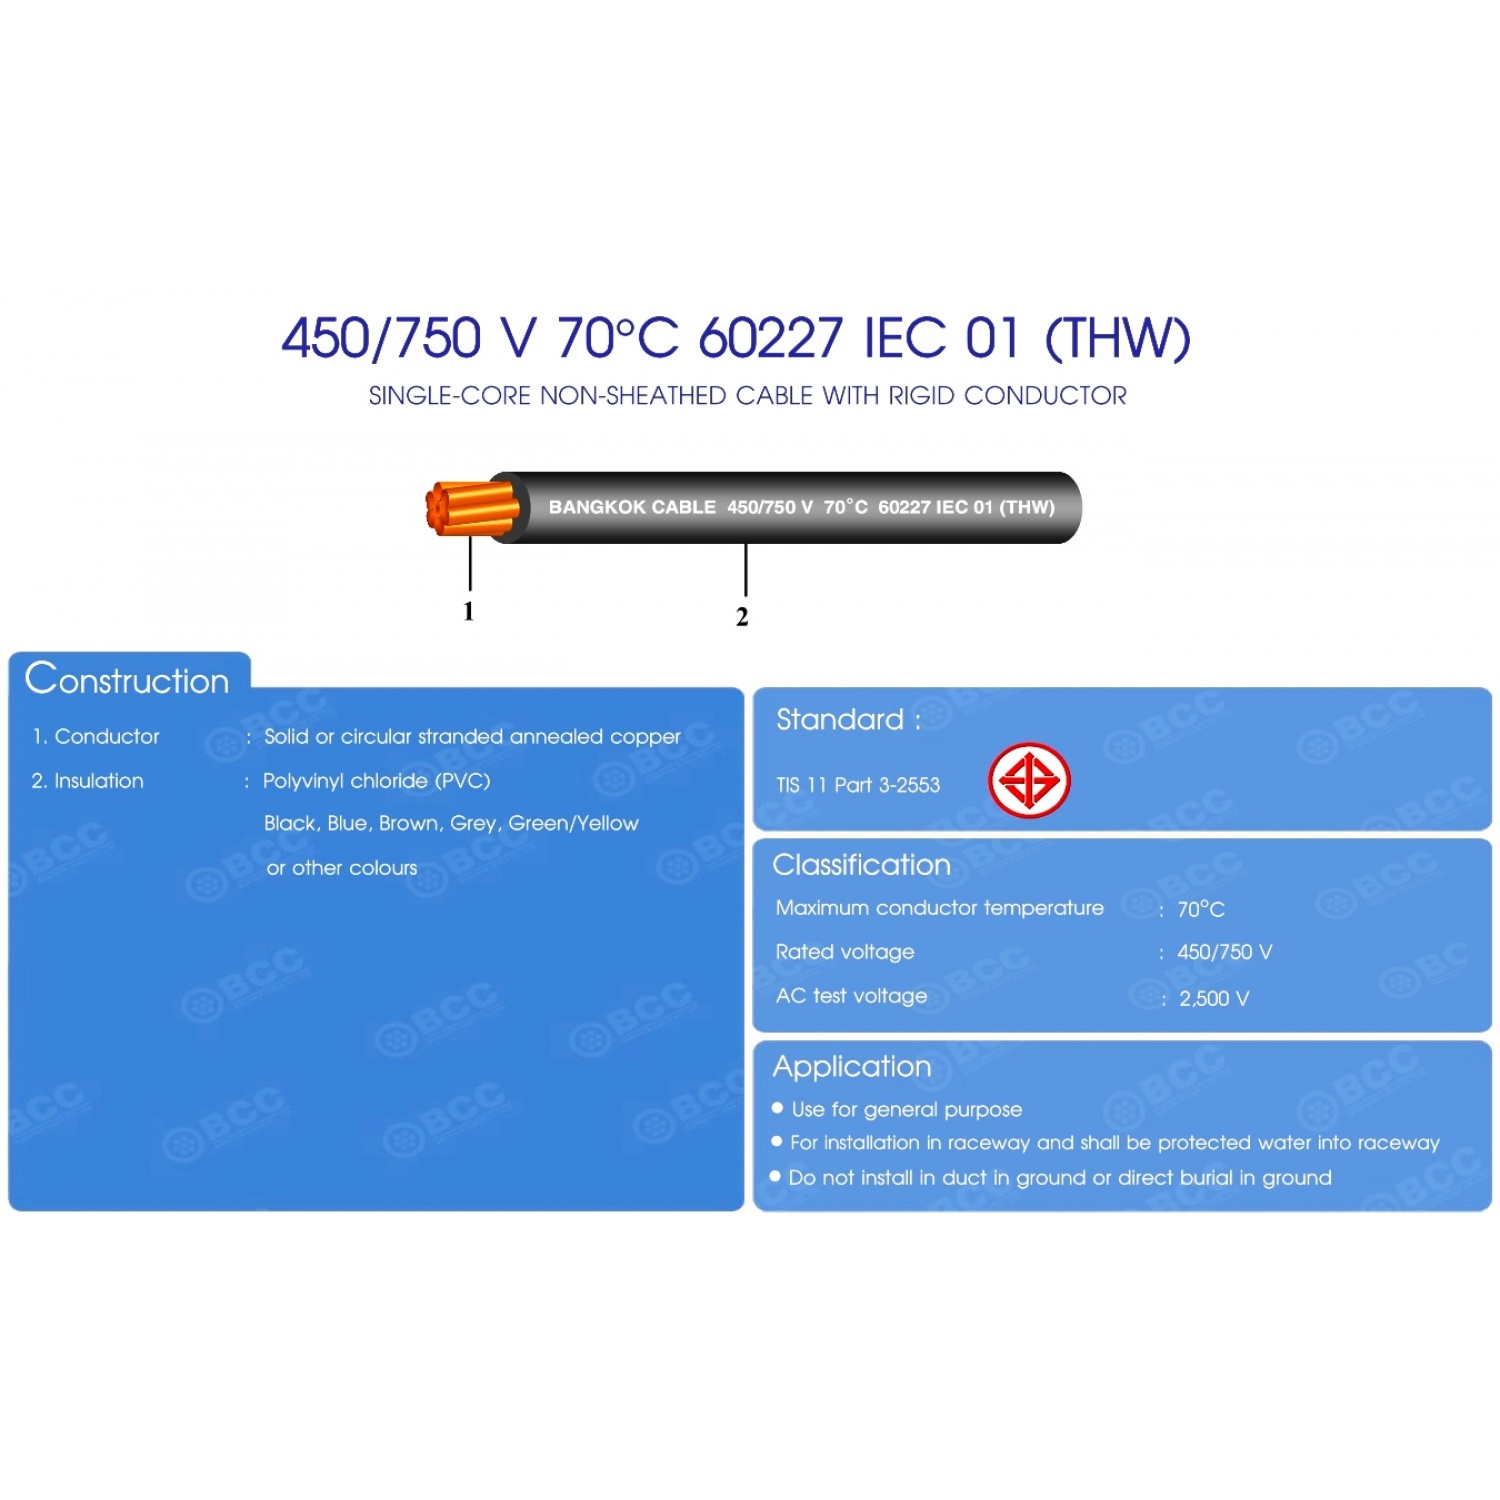 BCC สายไฟ IEC01 THW 1x2.5 SQ.MM. 100ม. สีดำ